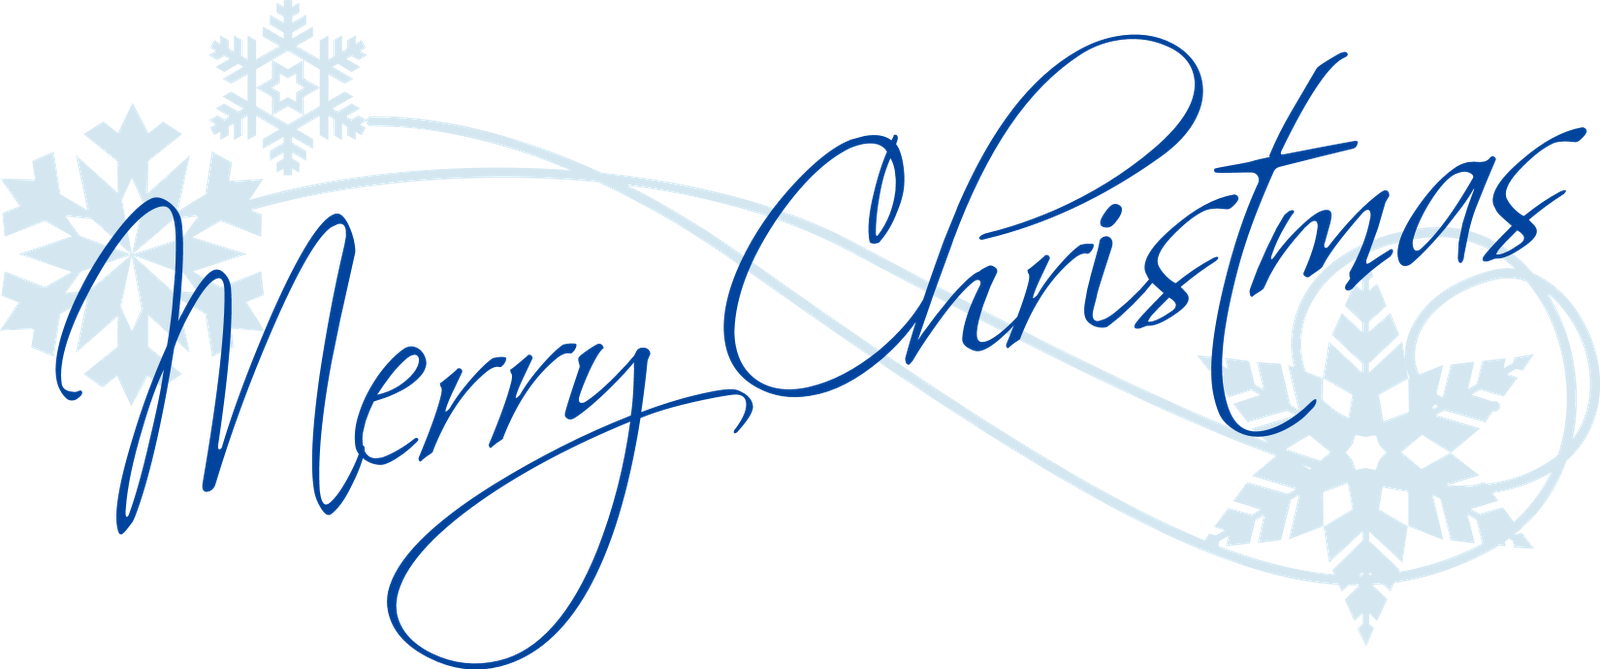 Merry-Christmas-Text-Transparent-14